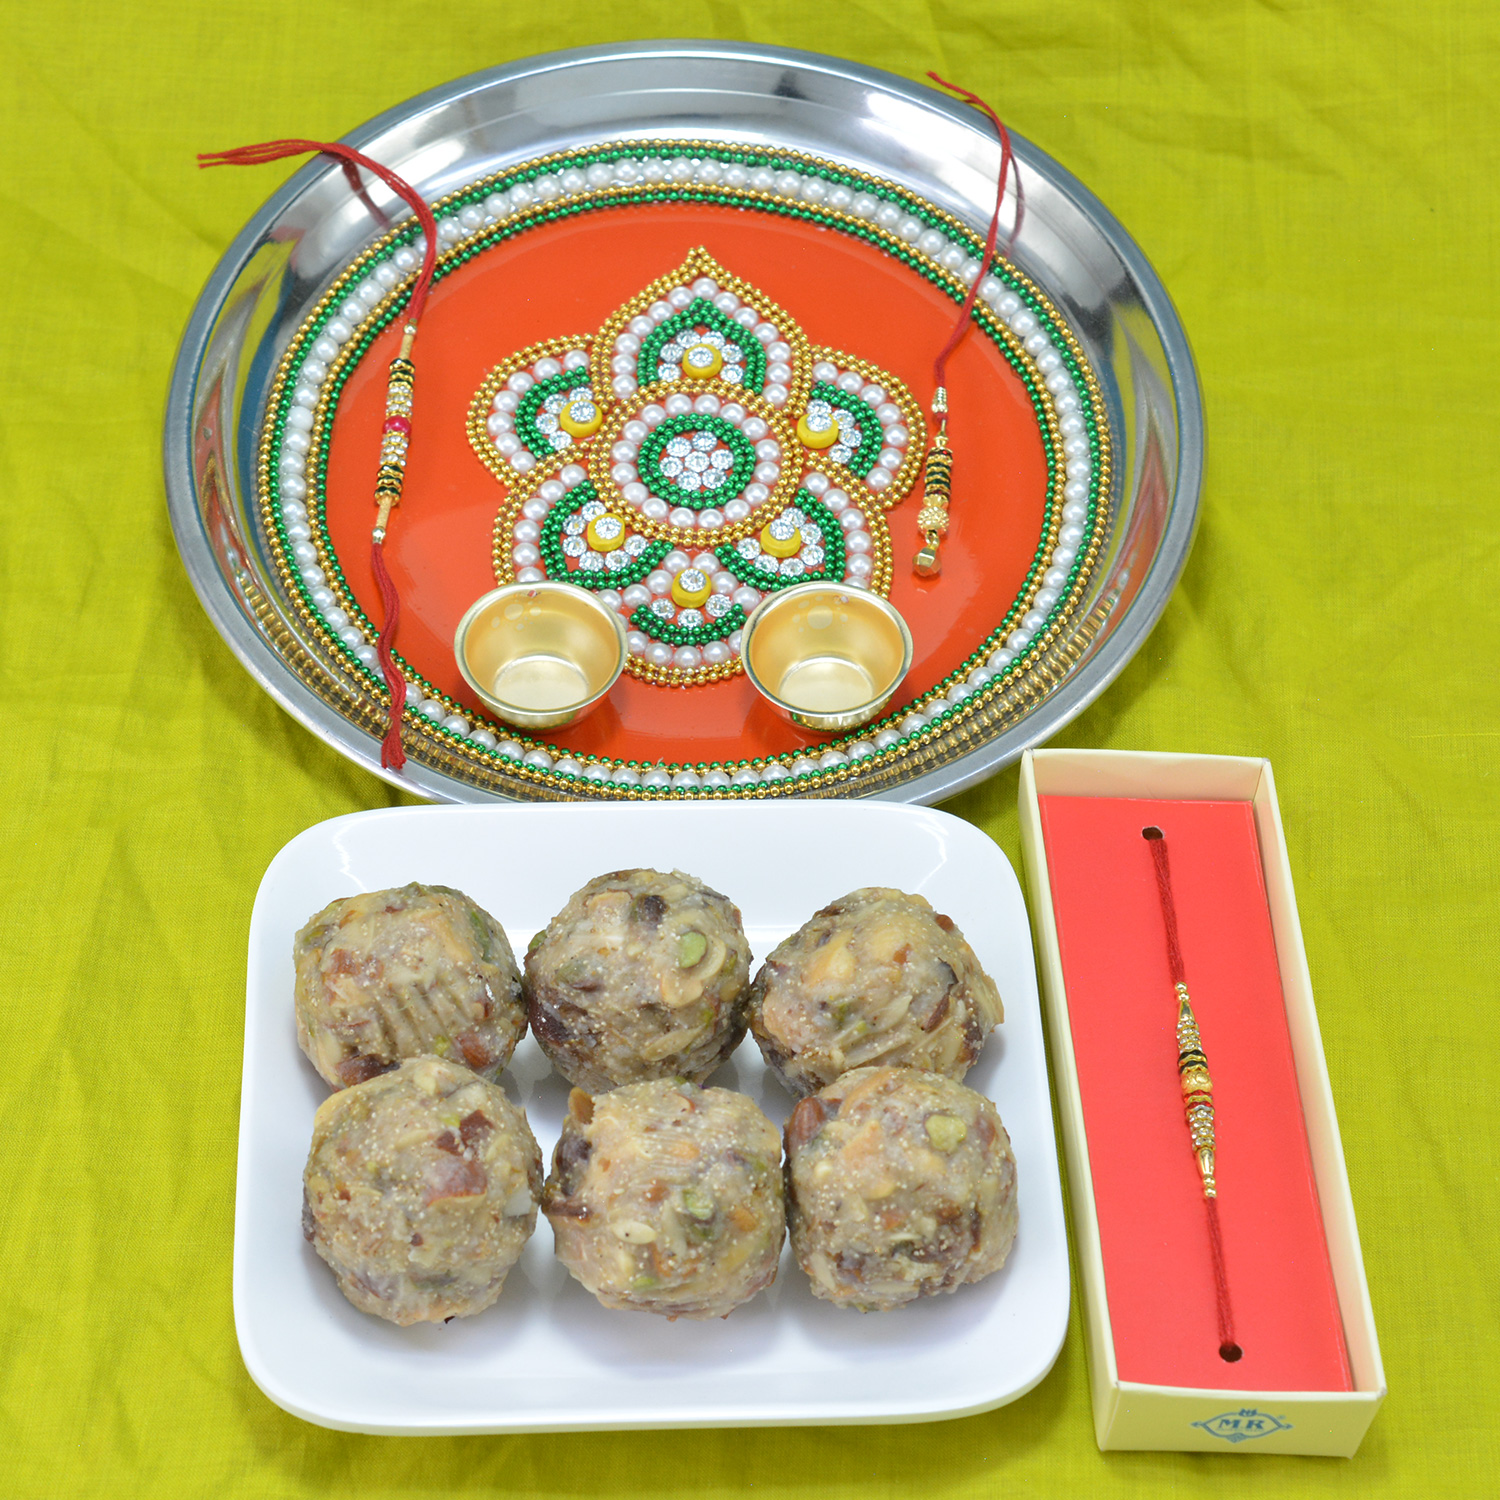 Piquant Kaju Dry Fruit Laddu with Colorfully Designed Pooja Thali along with Brother Rakhi